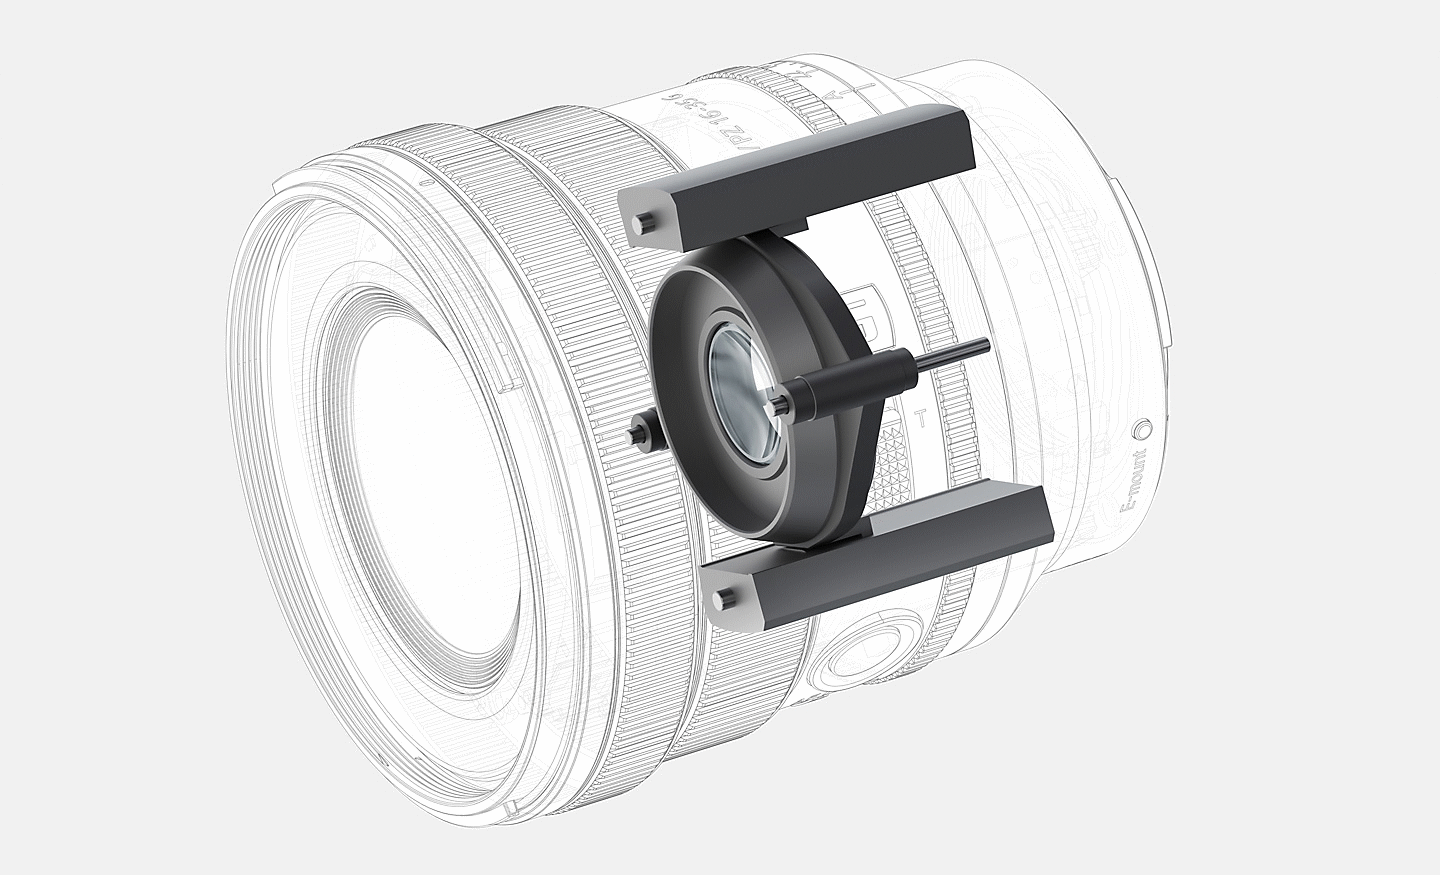 Illustration of XD Linear Motors construction for autofocus system